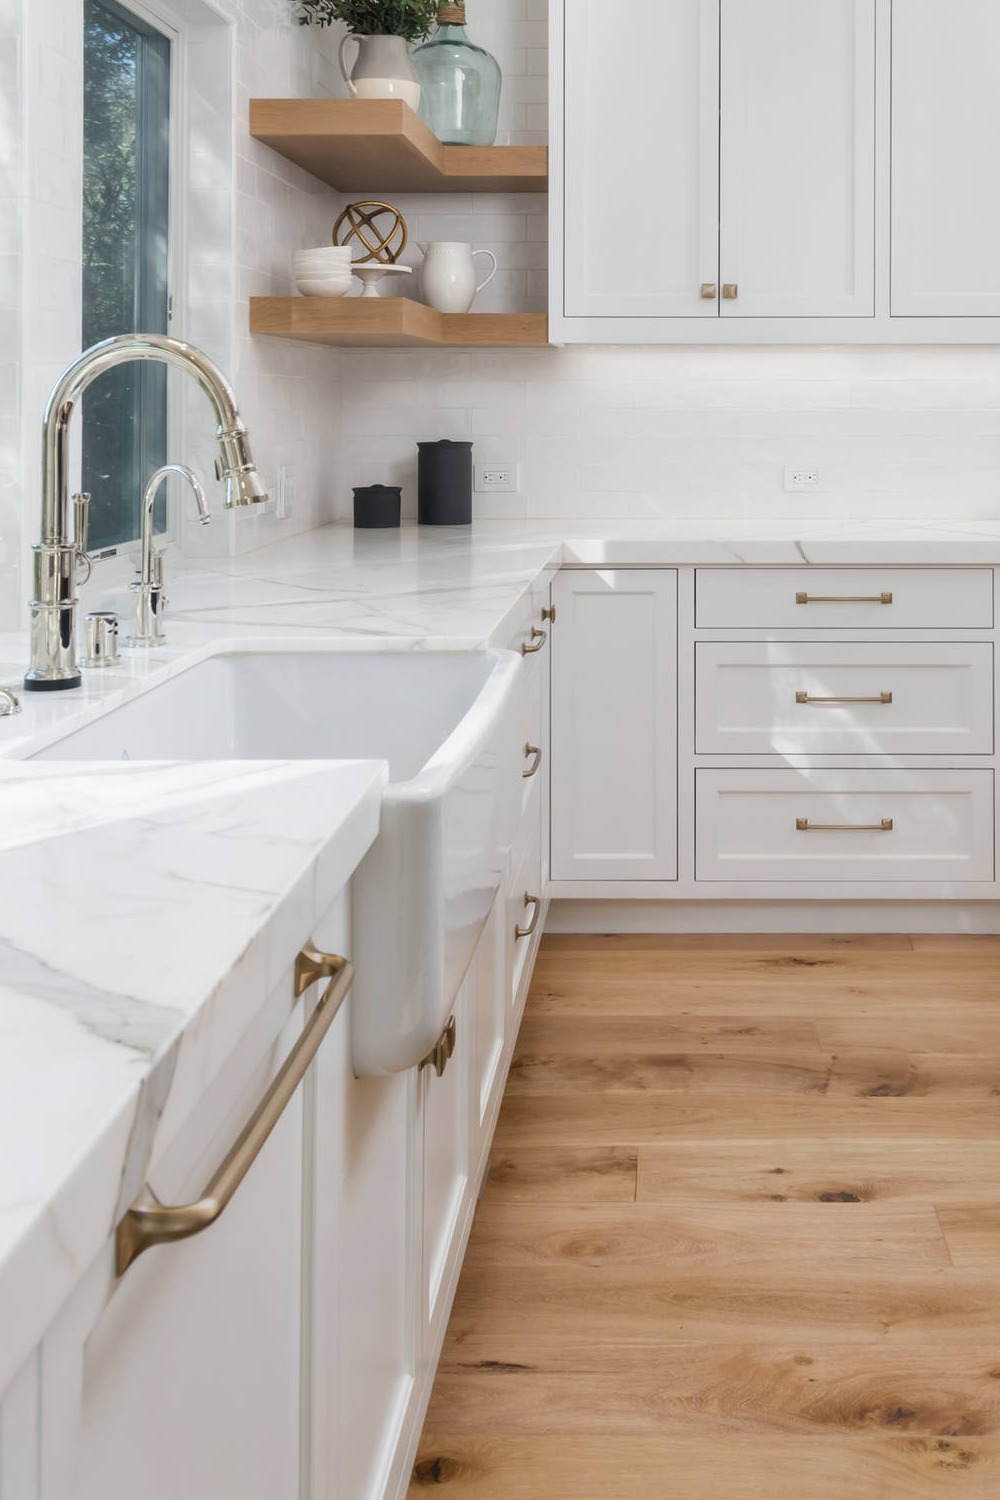 White Quartz Countertops Shaker Cabinets Farmhouse Sink Light Wood Floor